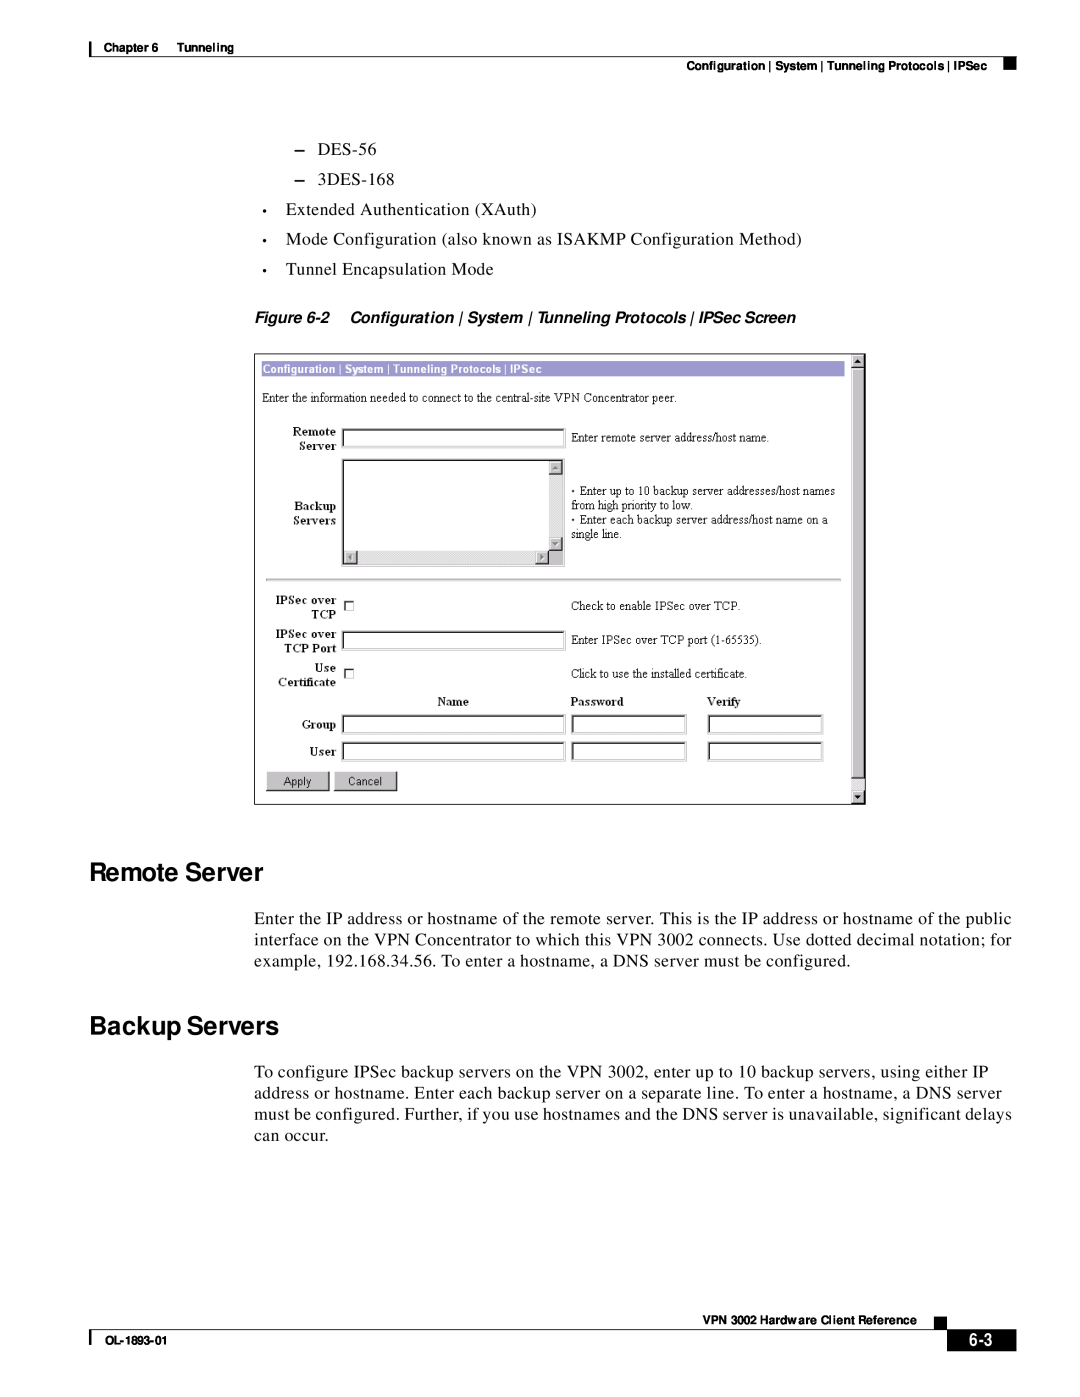 Cisco Systems VPN 3002 manual Remote Server, Backup Servers 